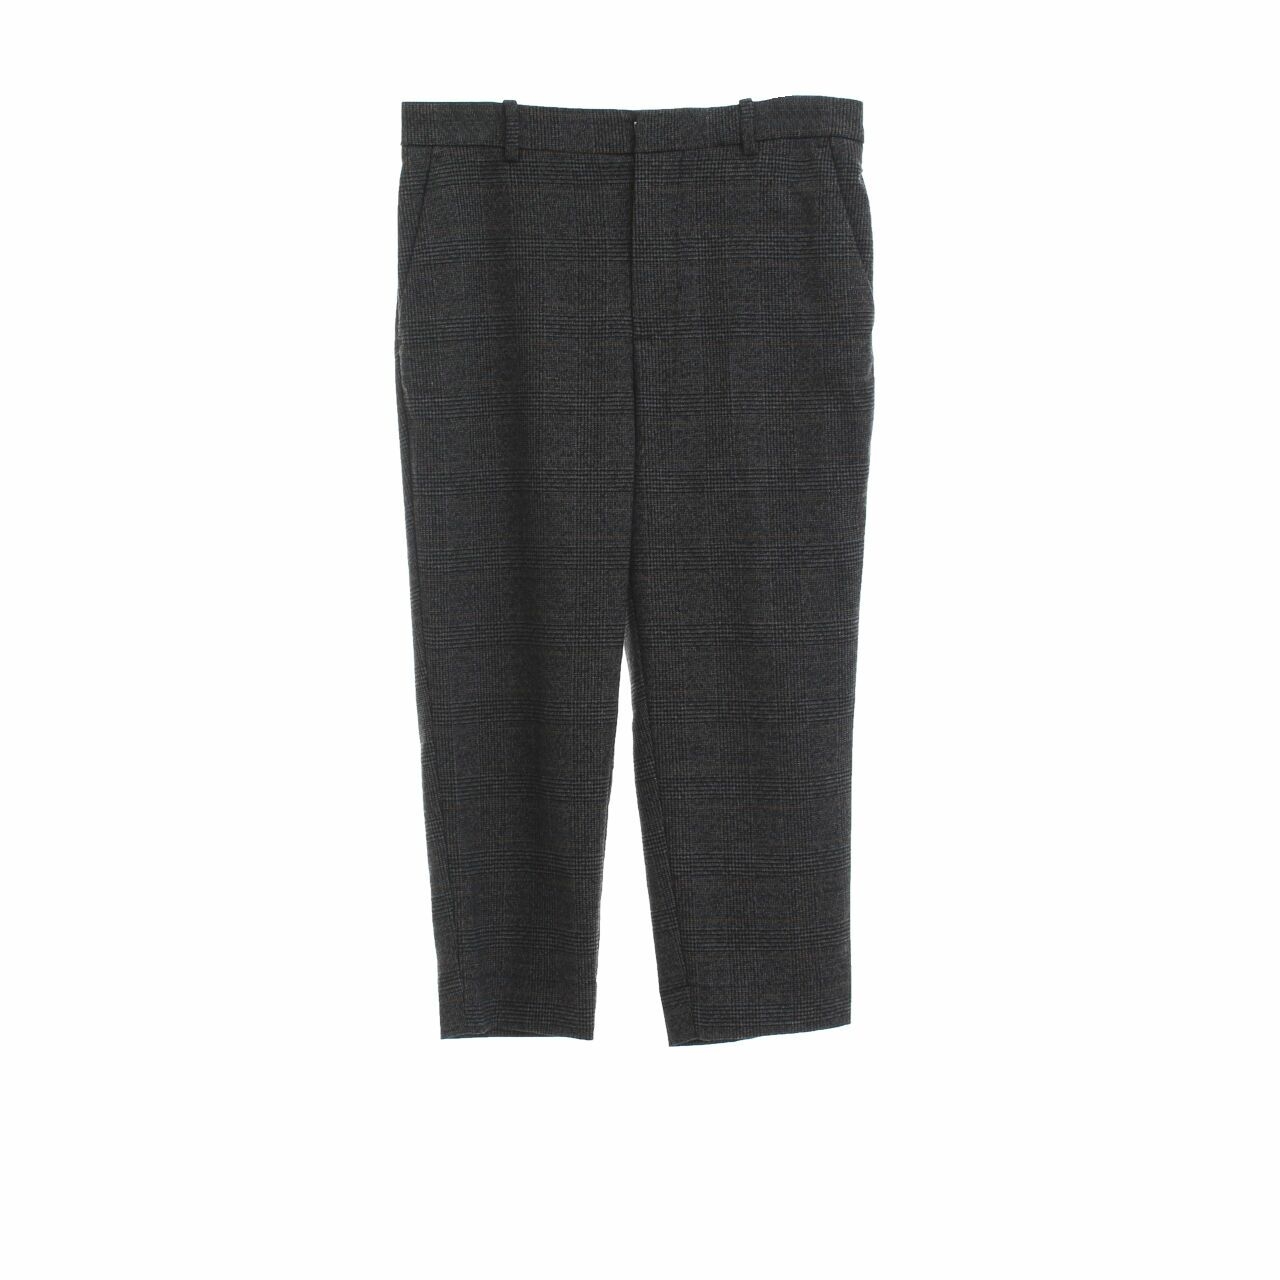 Zara Dark Grey Plaid Long Pants